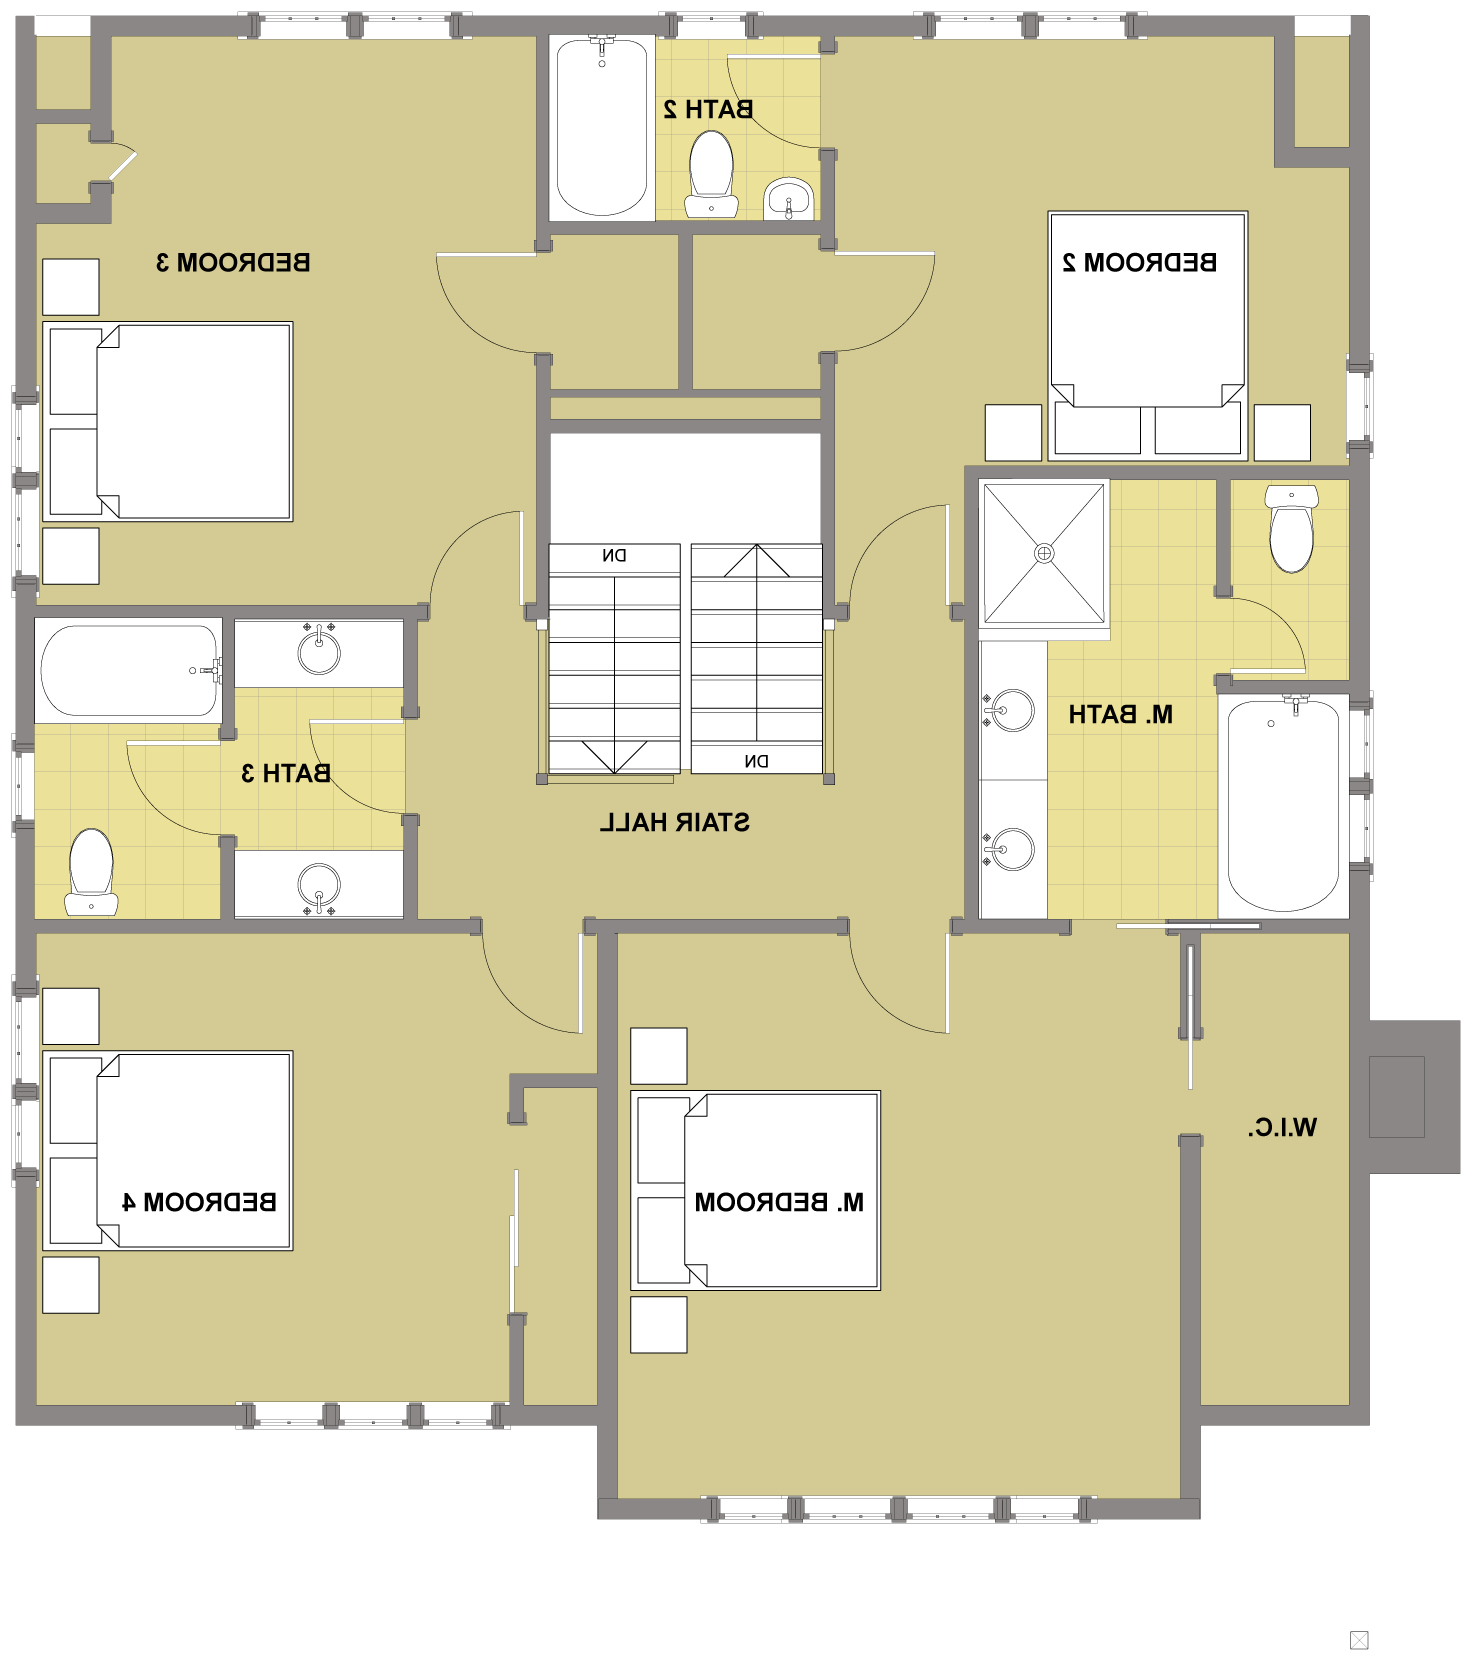 Blakely Second Floor - Floor Plan Reverse